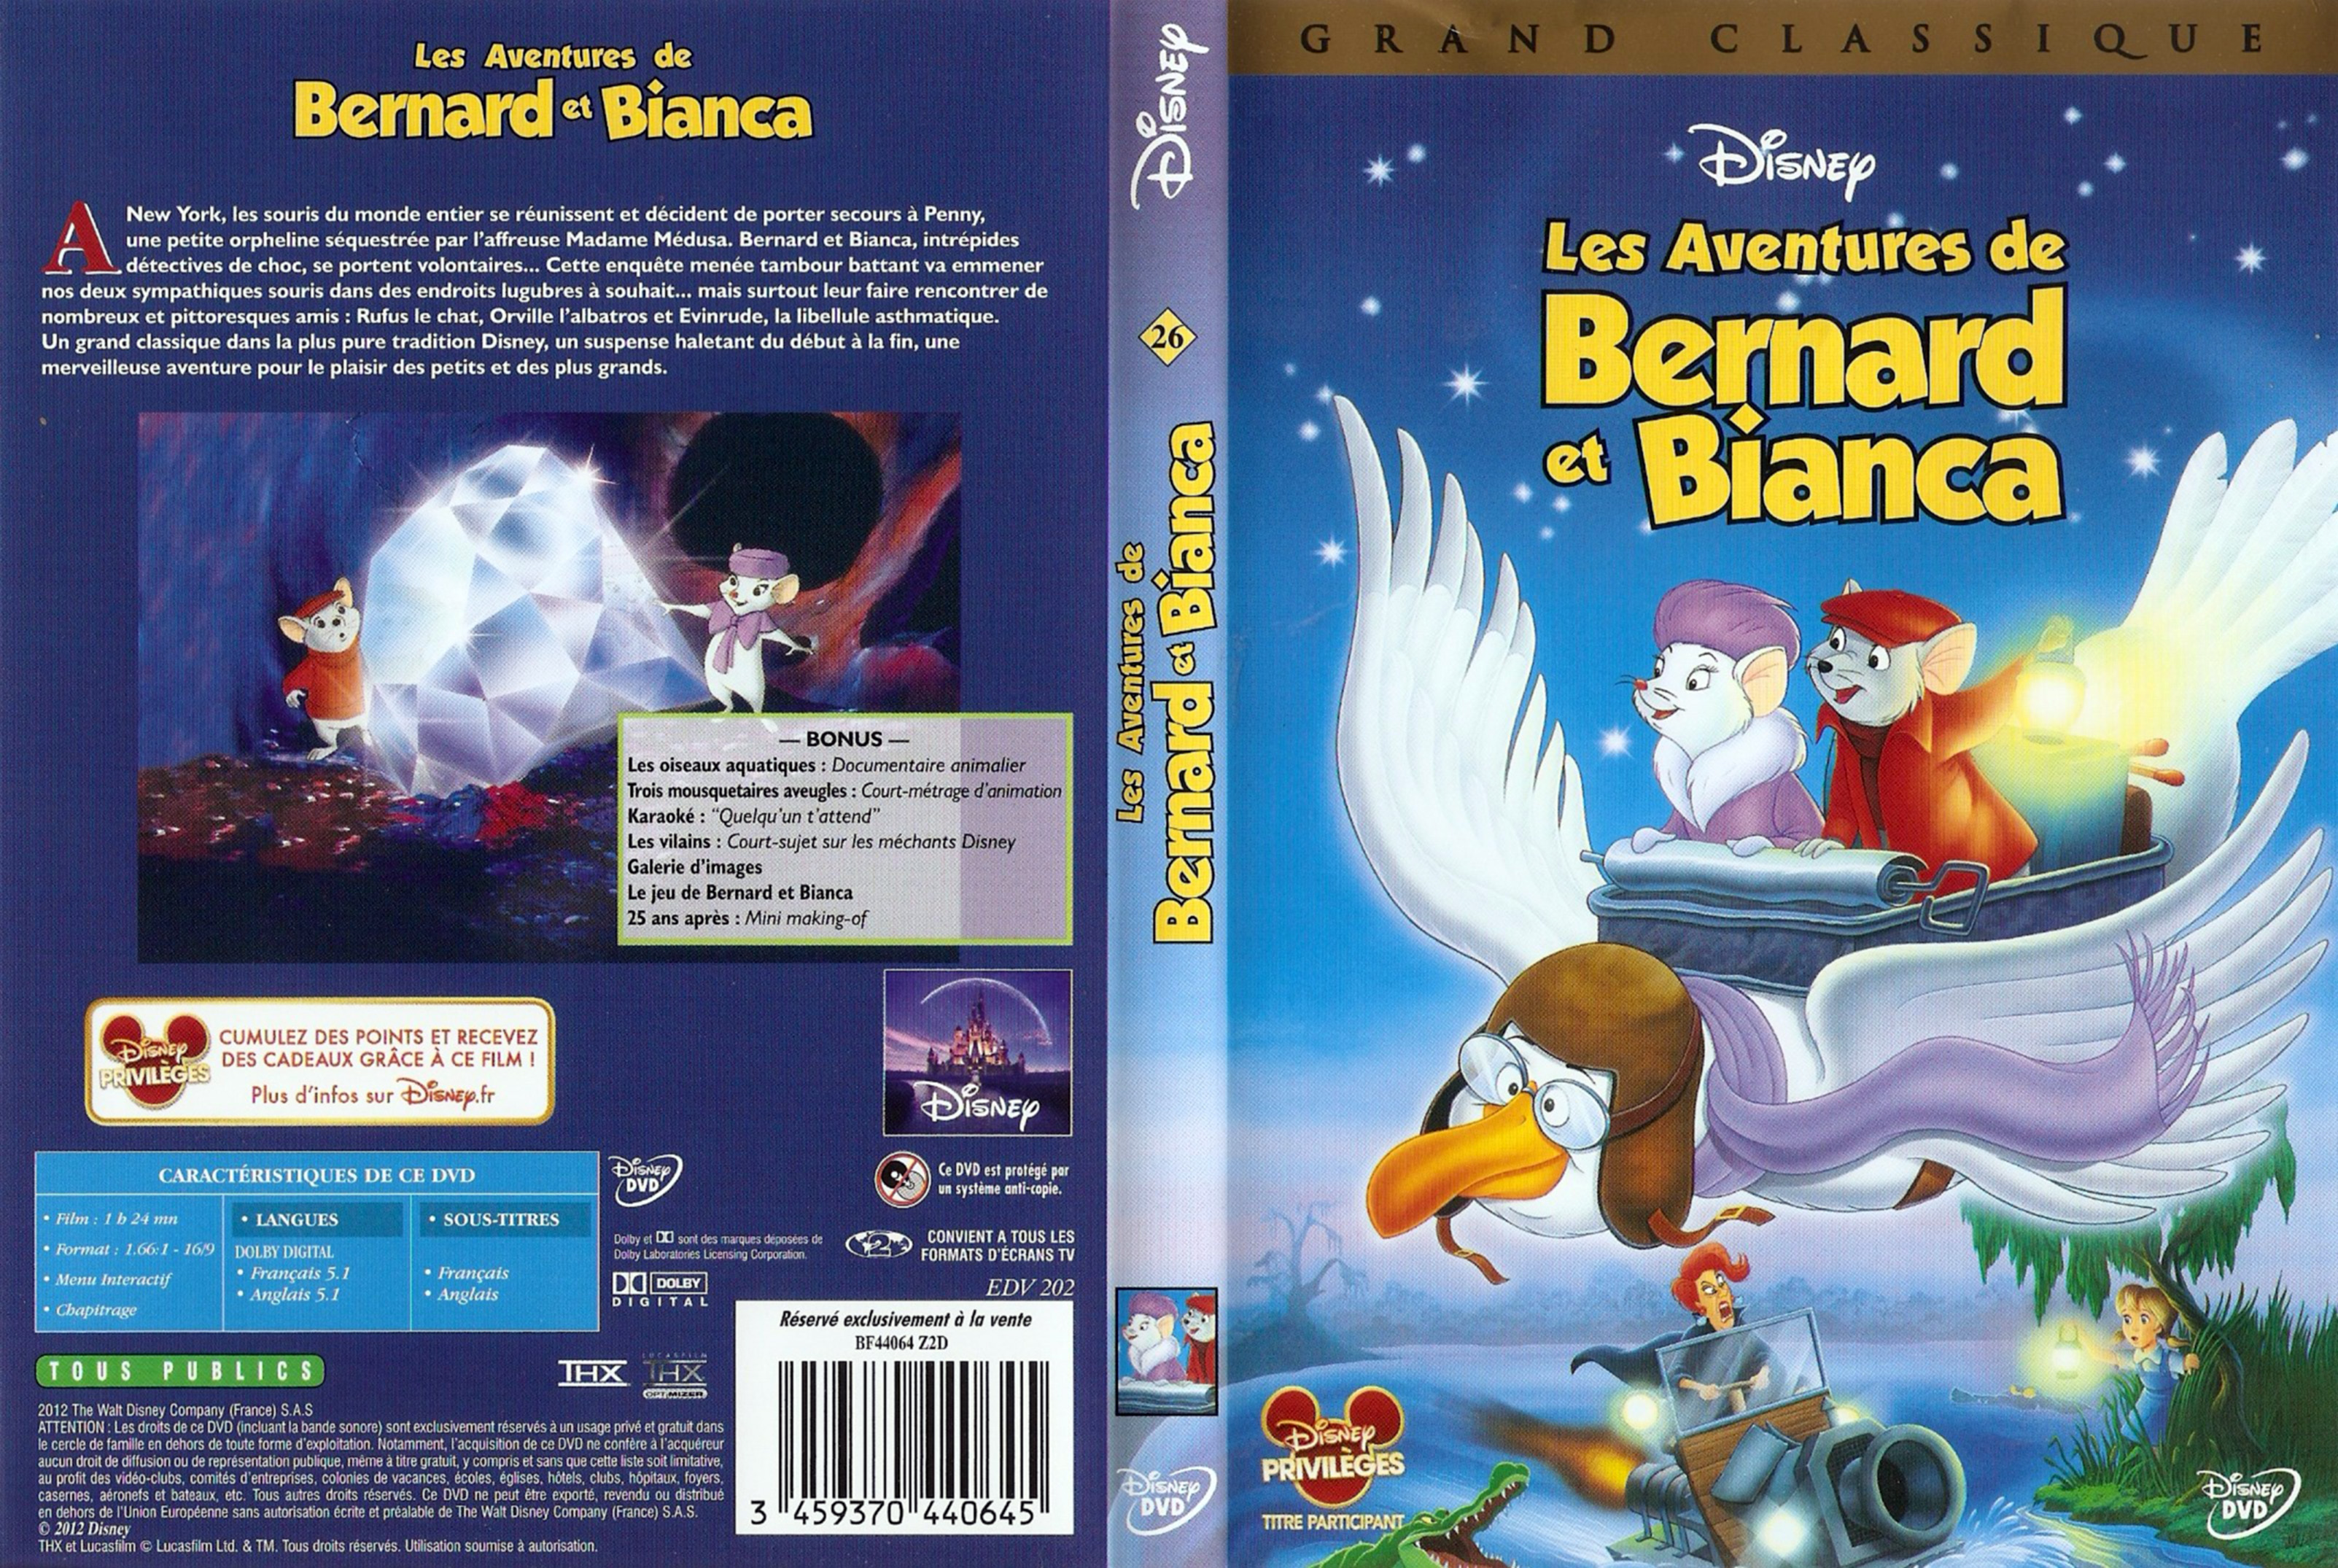 Jaquette DVD Les aventures de Bernard et Bianca v3